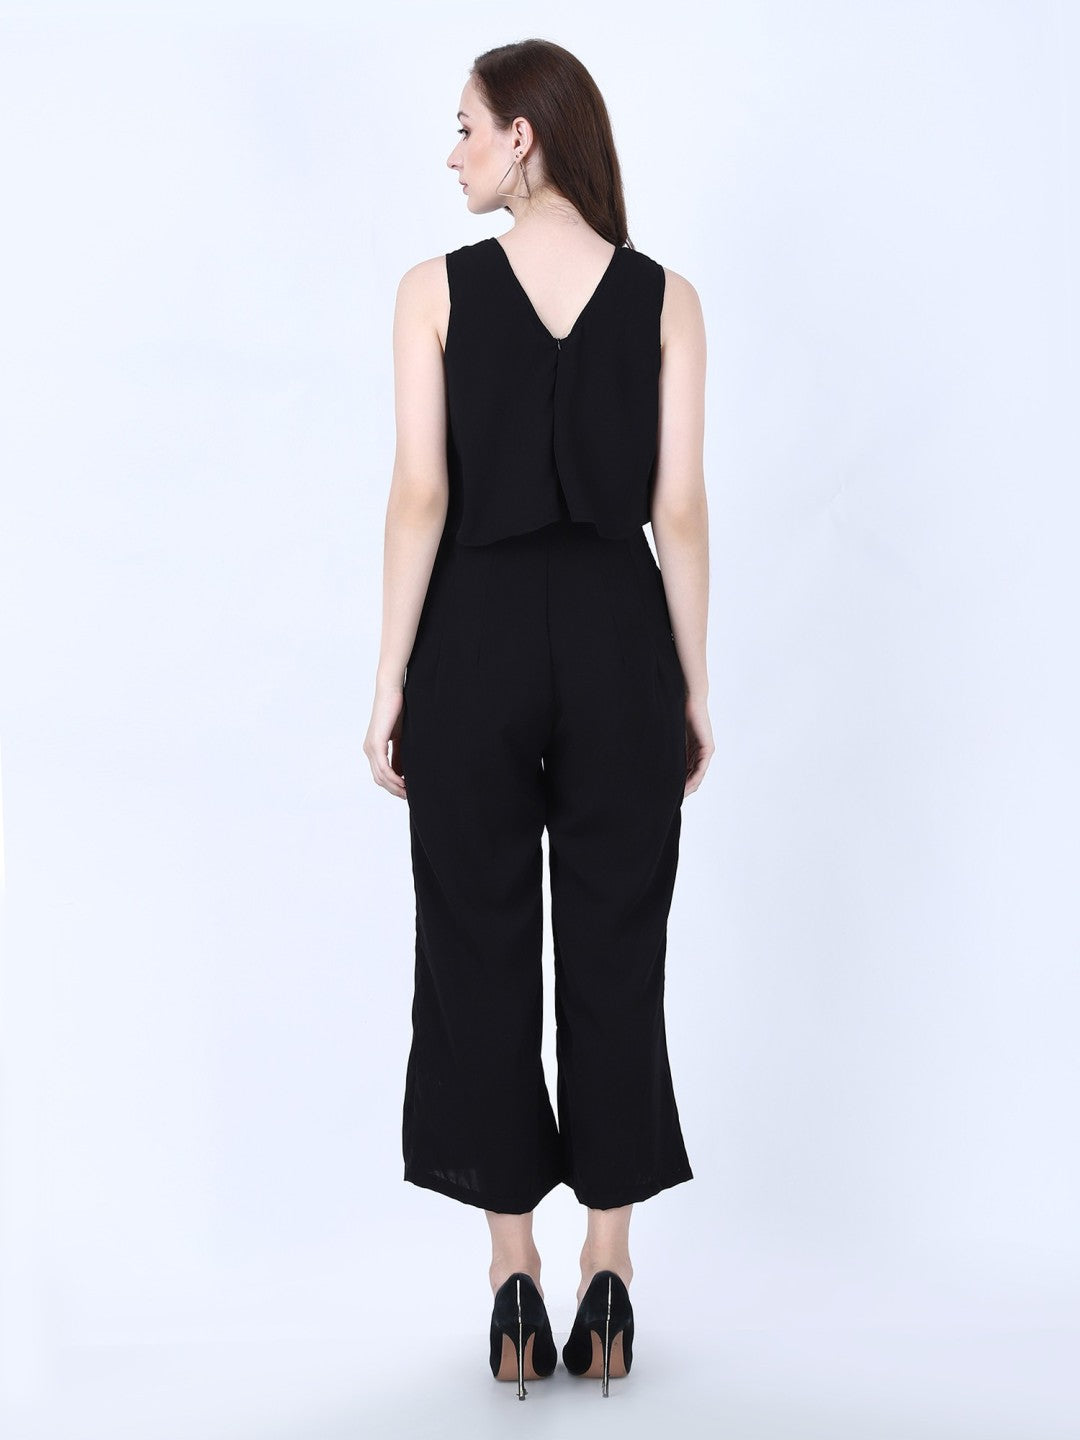 Swagy Women's Black Color Solid Full Length Sleeveless Regular Jumpsuit